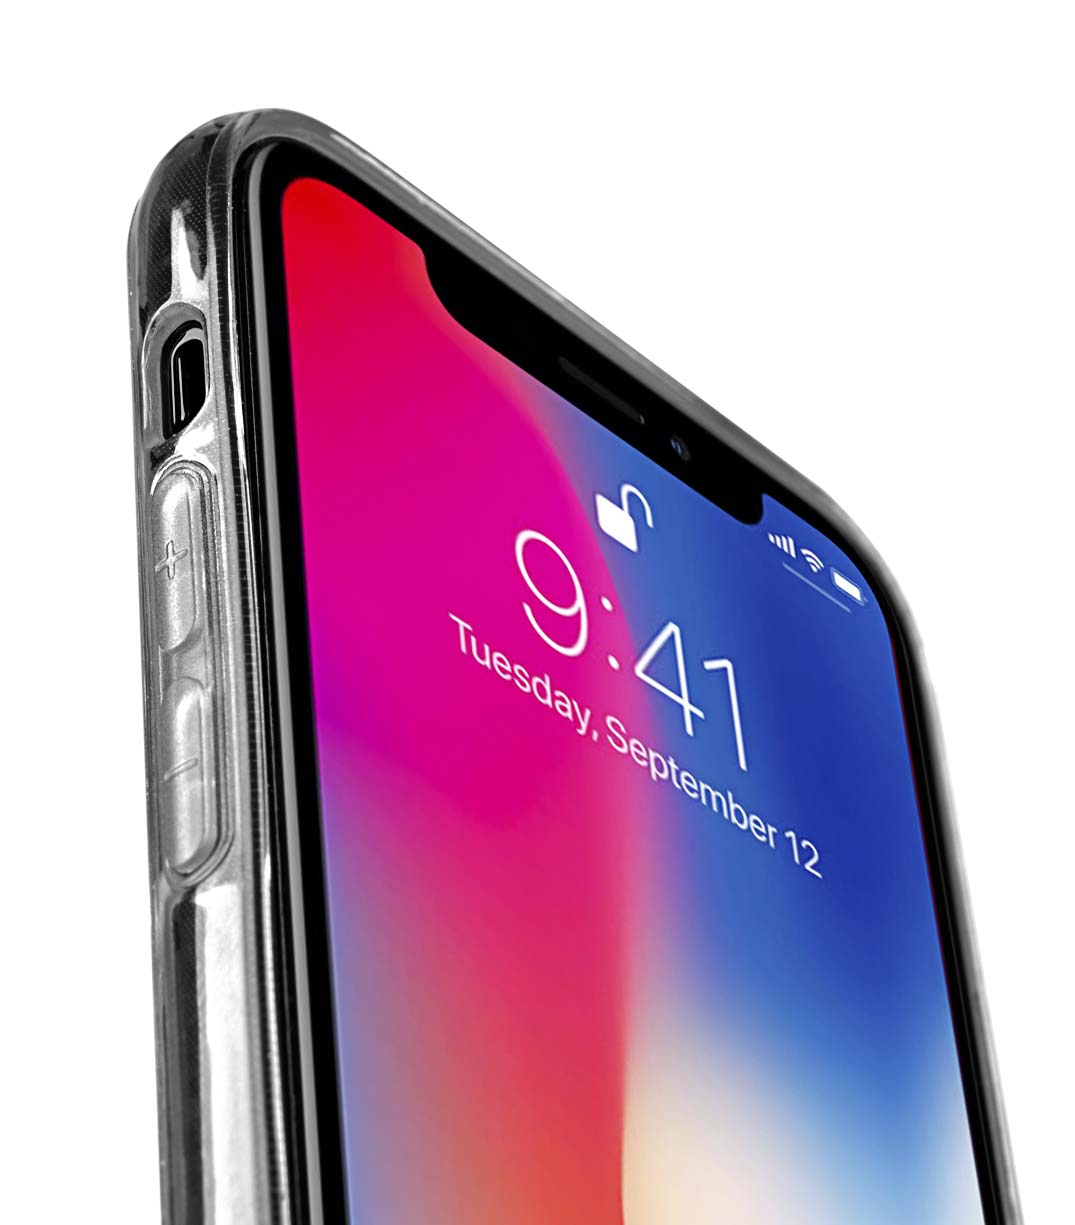 Melkco PolyUltima Case for Apple iPhone X - ( Transparent / Black )